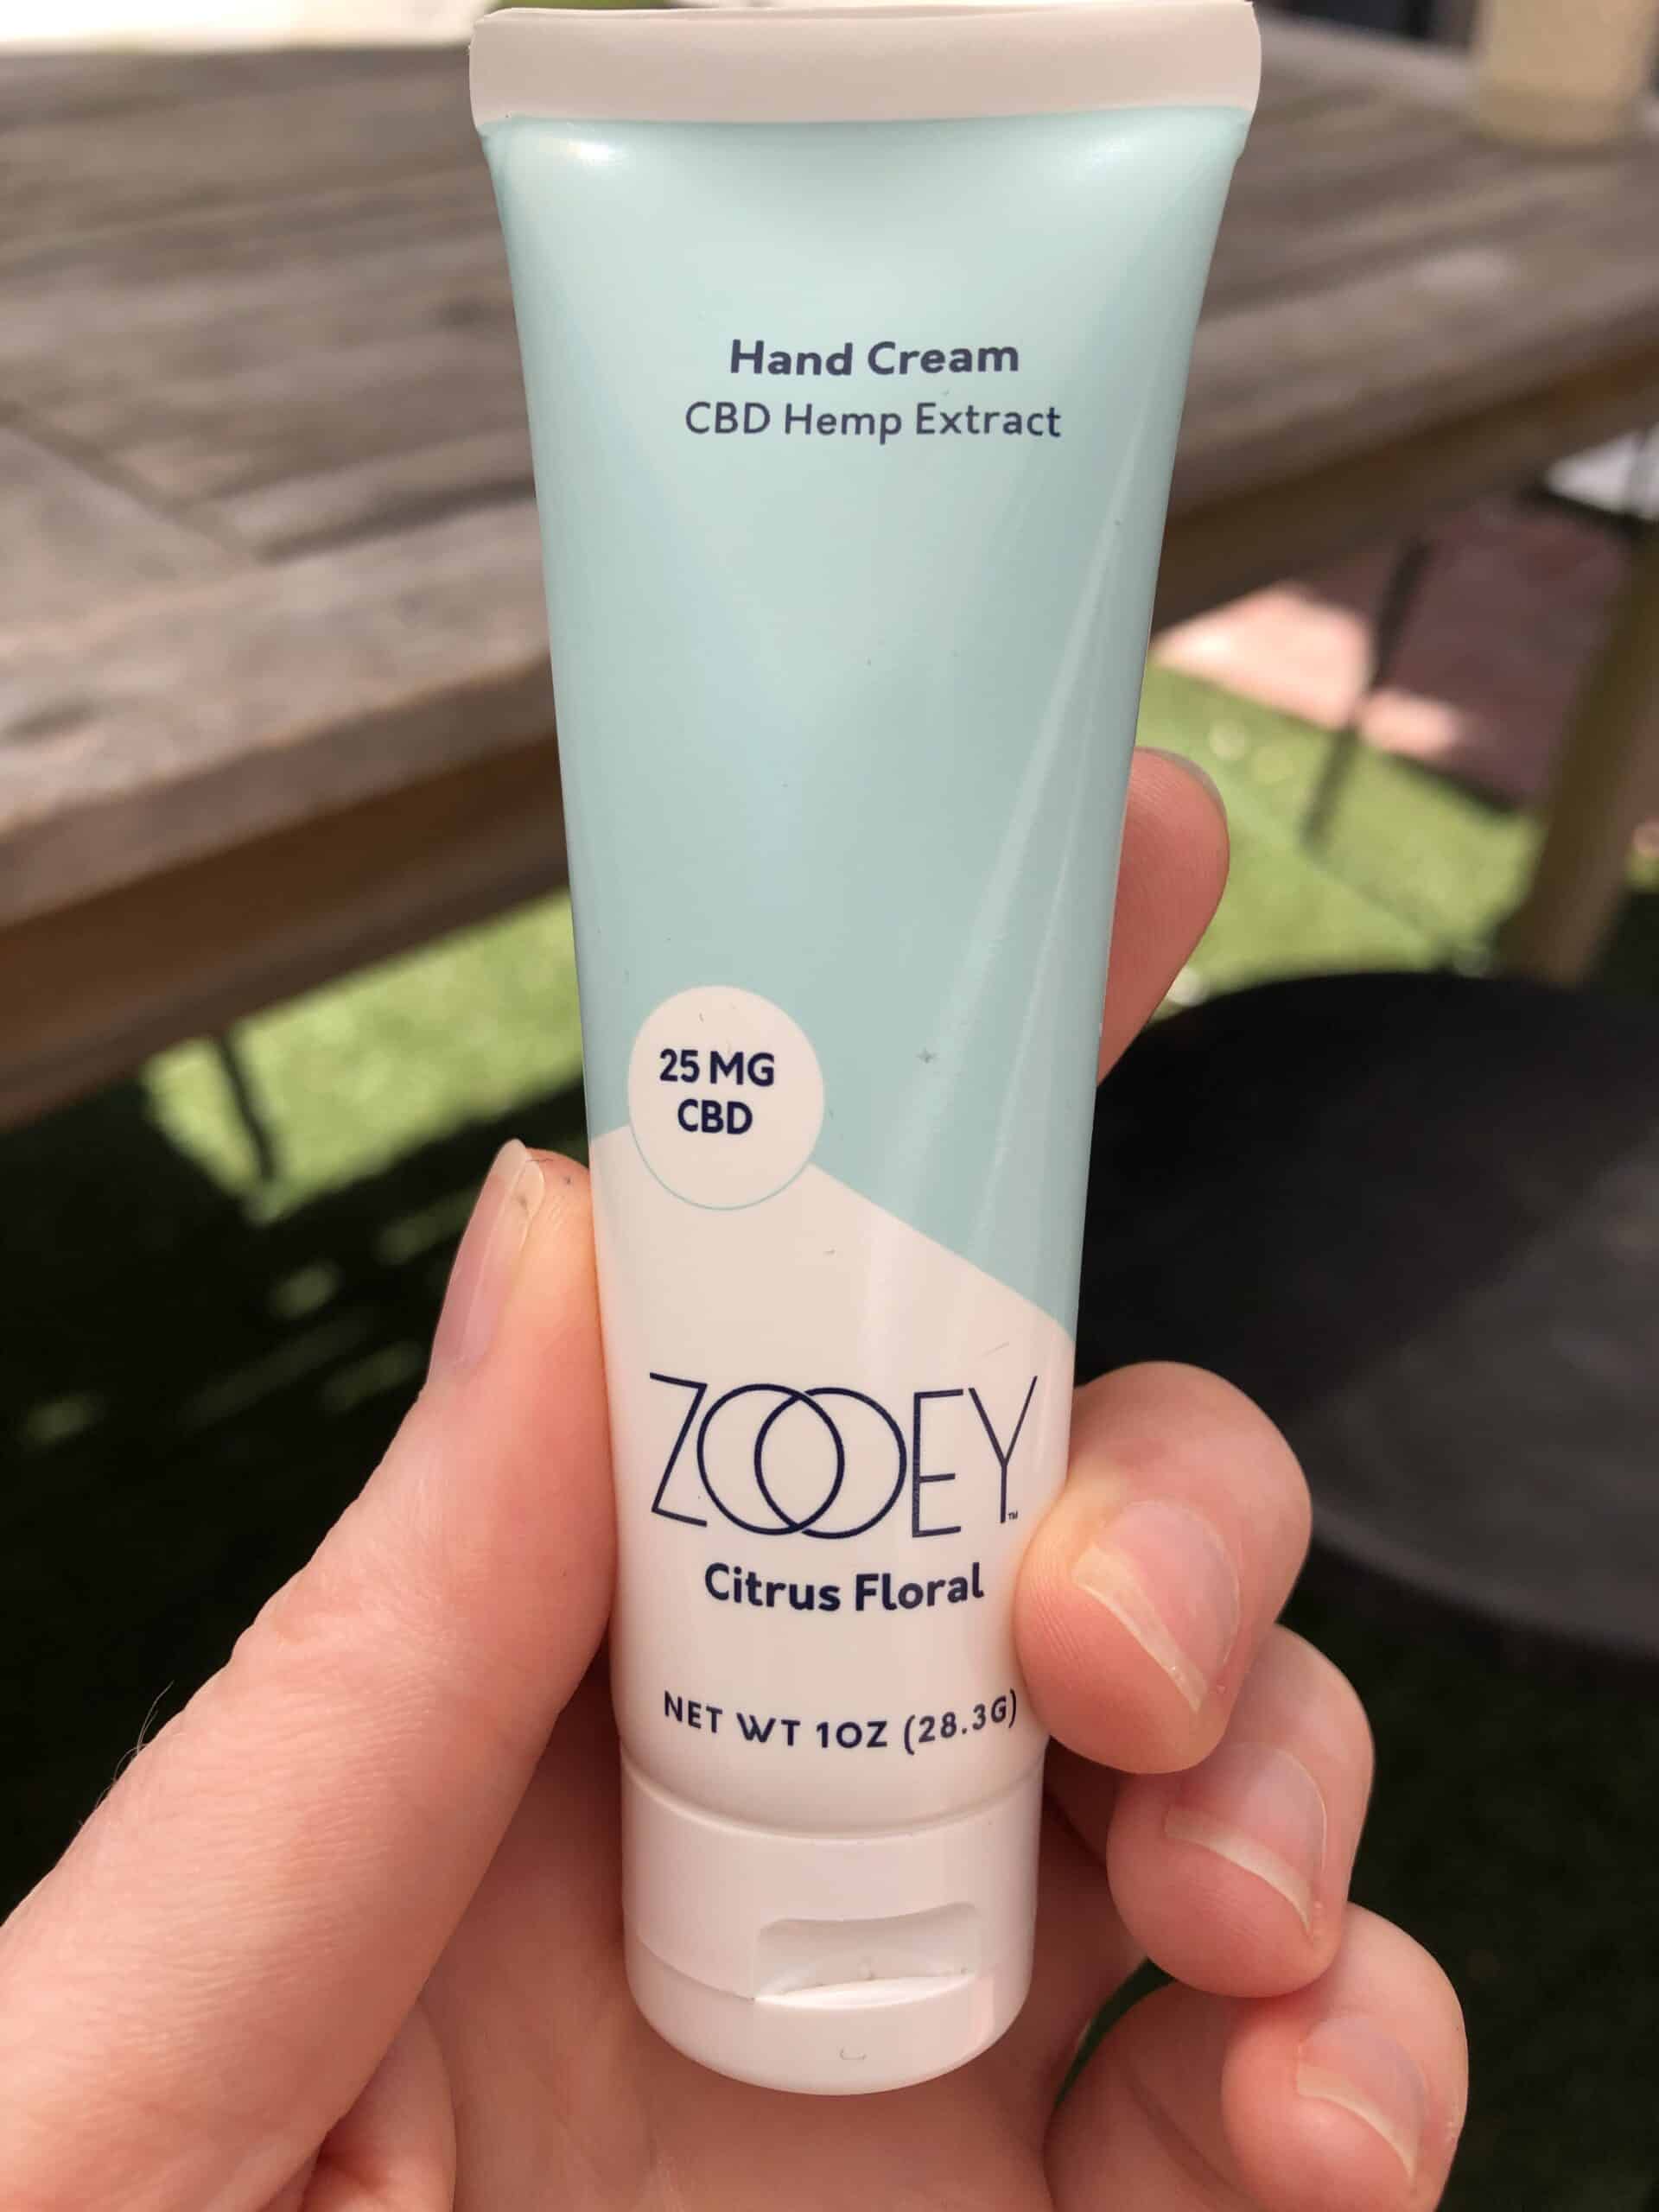 social cbd zooey citrus floral hand cream save on cannabis beauty shot